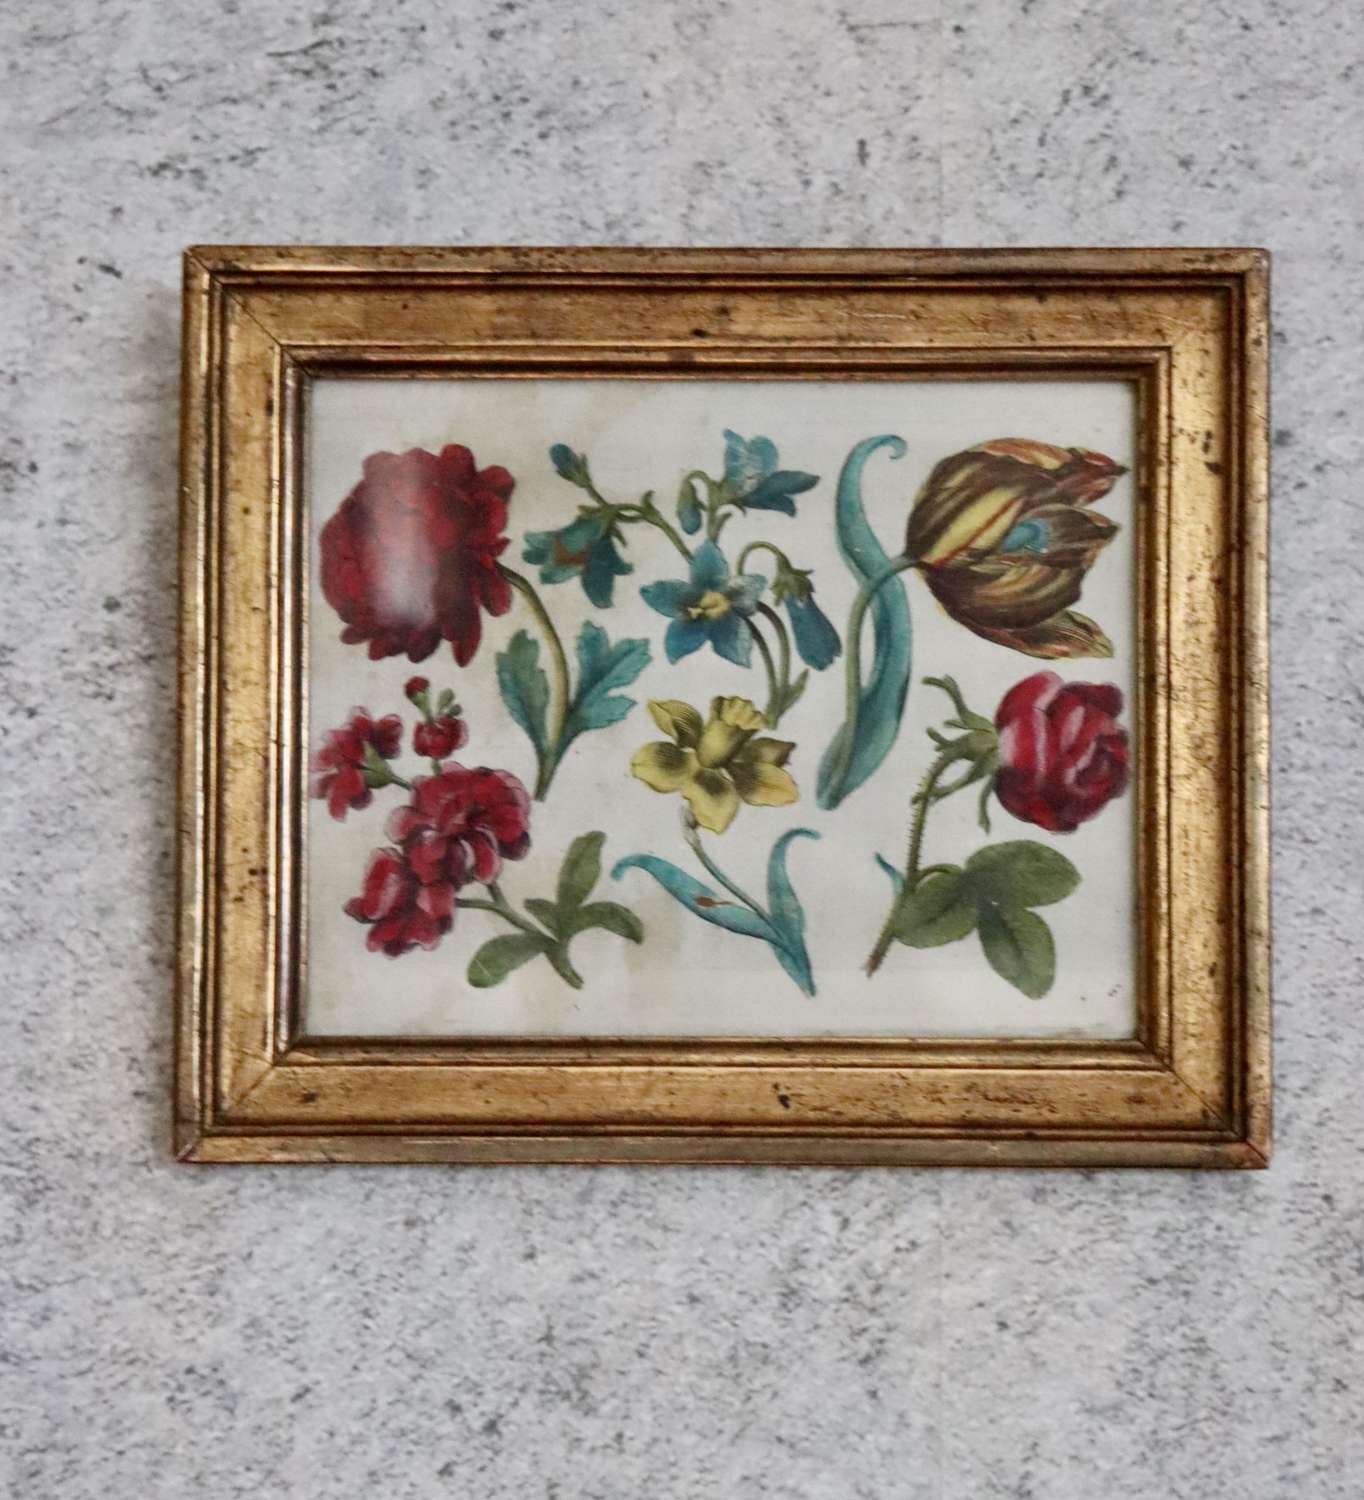 Georgian floral engraving in old frame